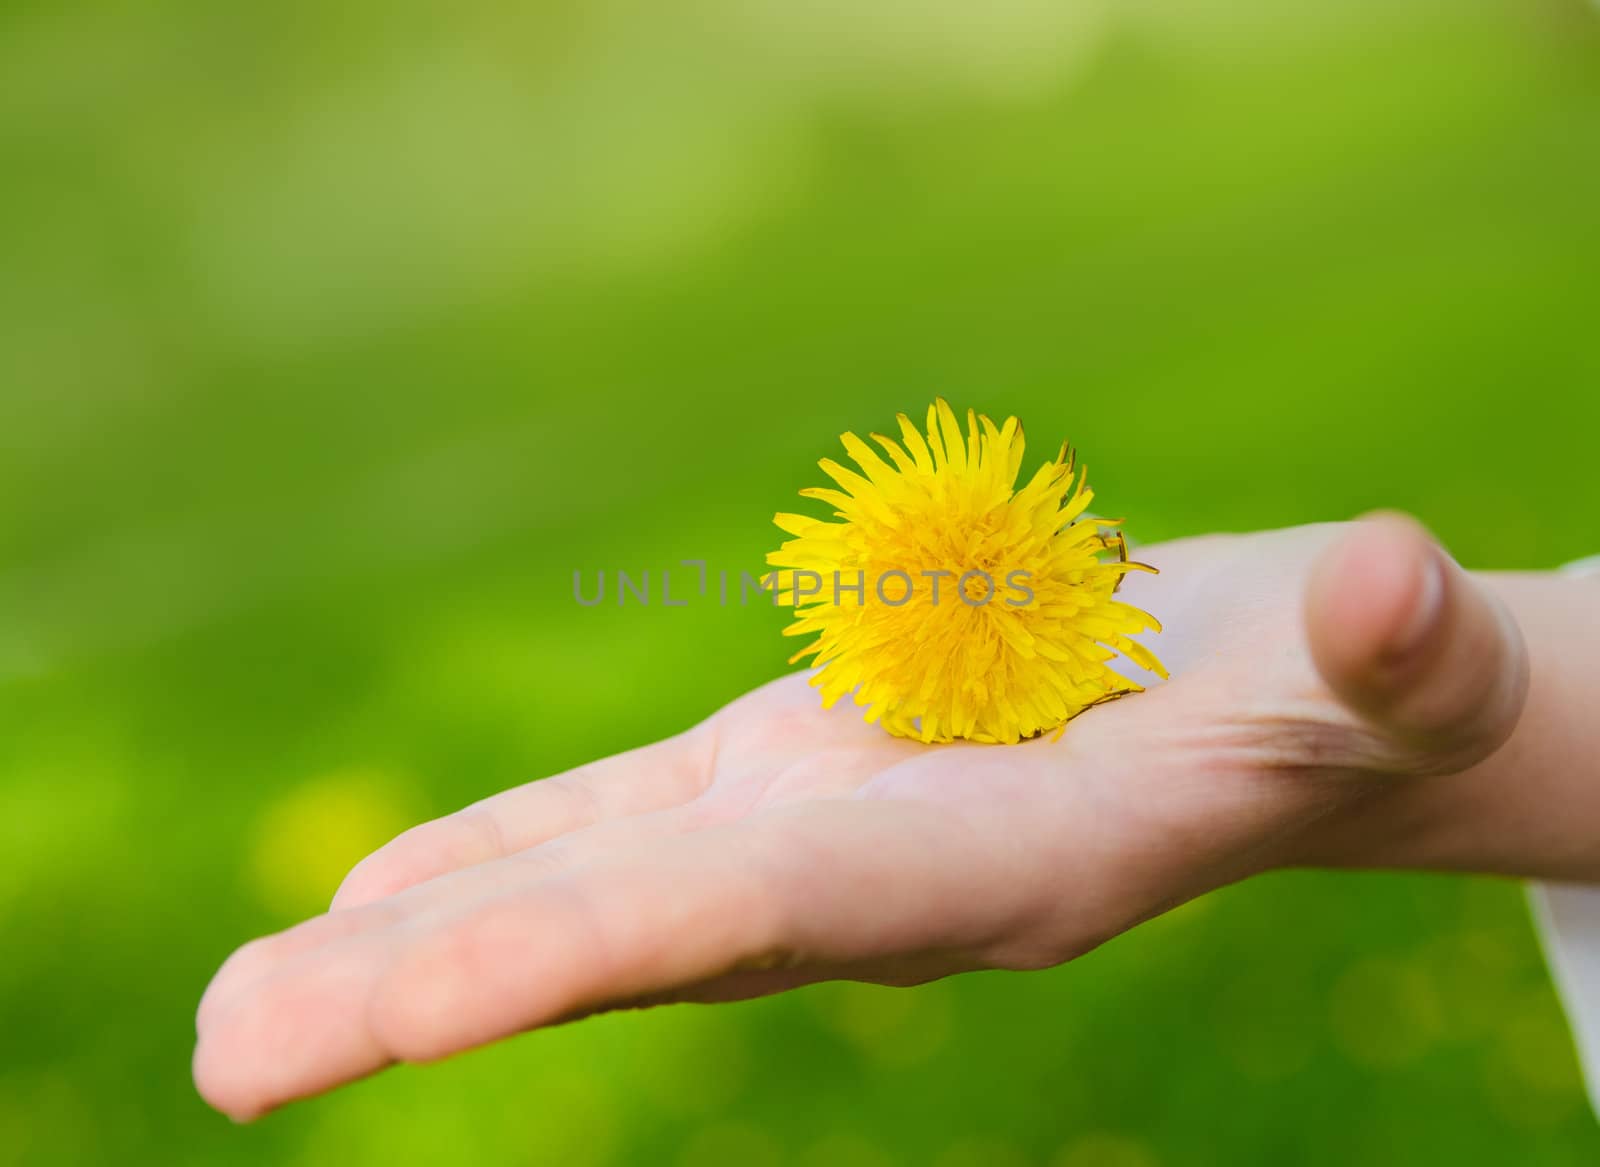 bright yellow flower lie on a hand. Blur green backgrounds